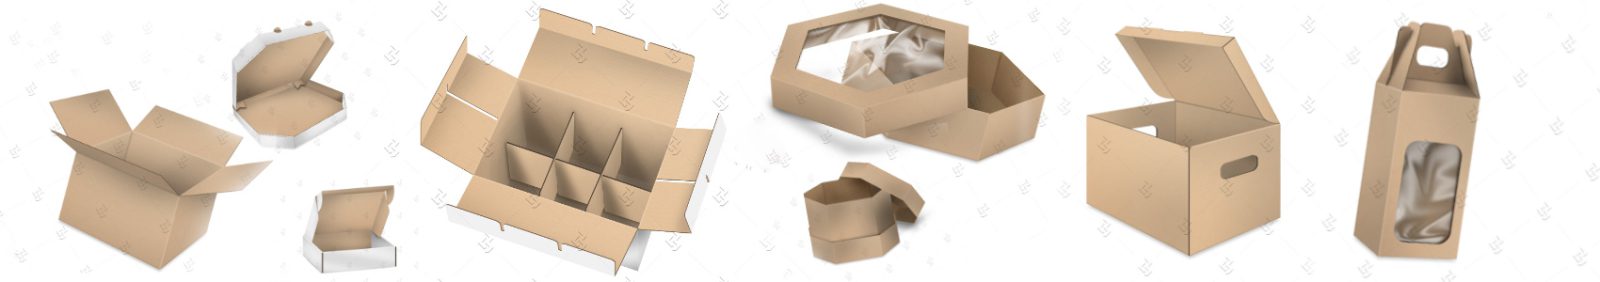 Składane pudełka kartonowe od producenta